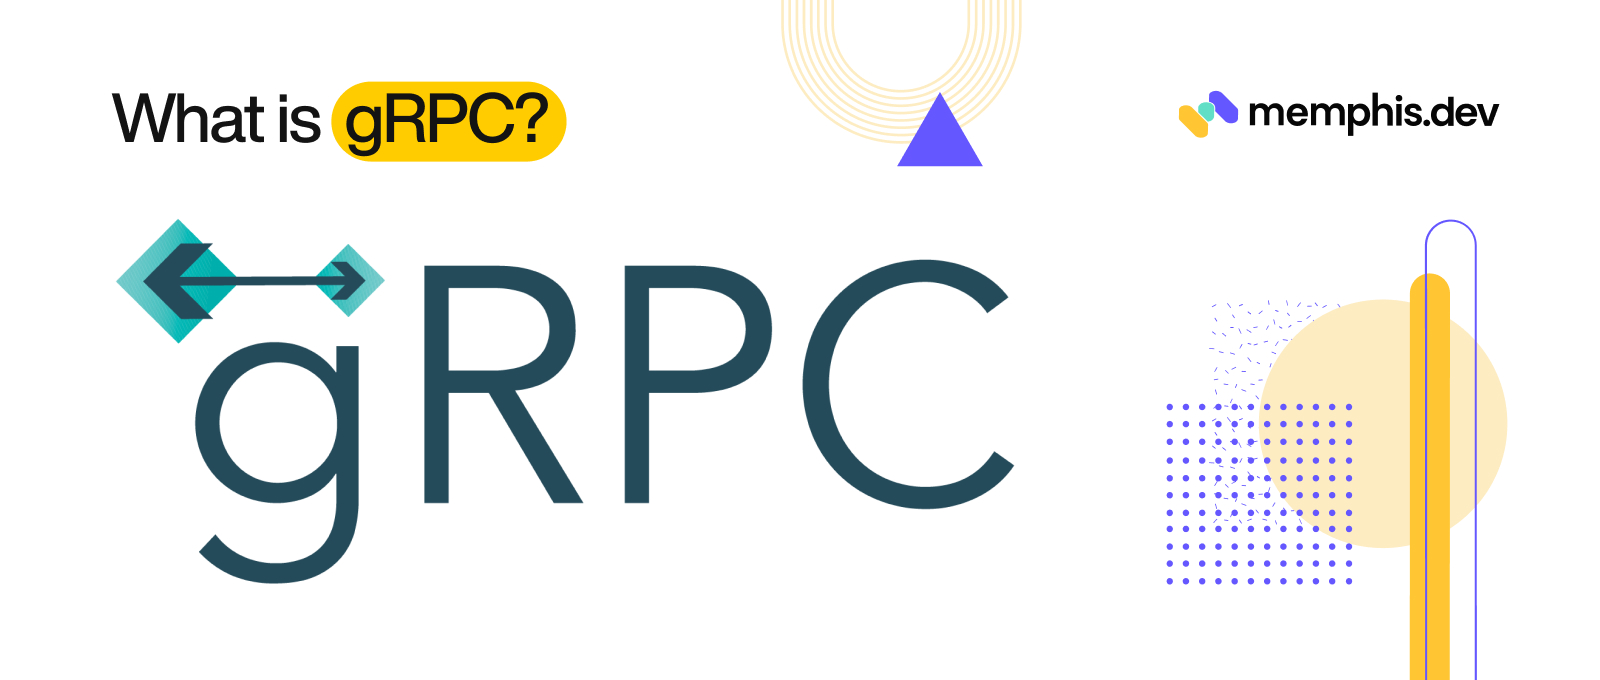 gRPC Logo